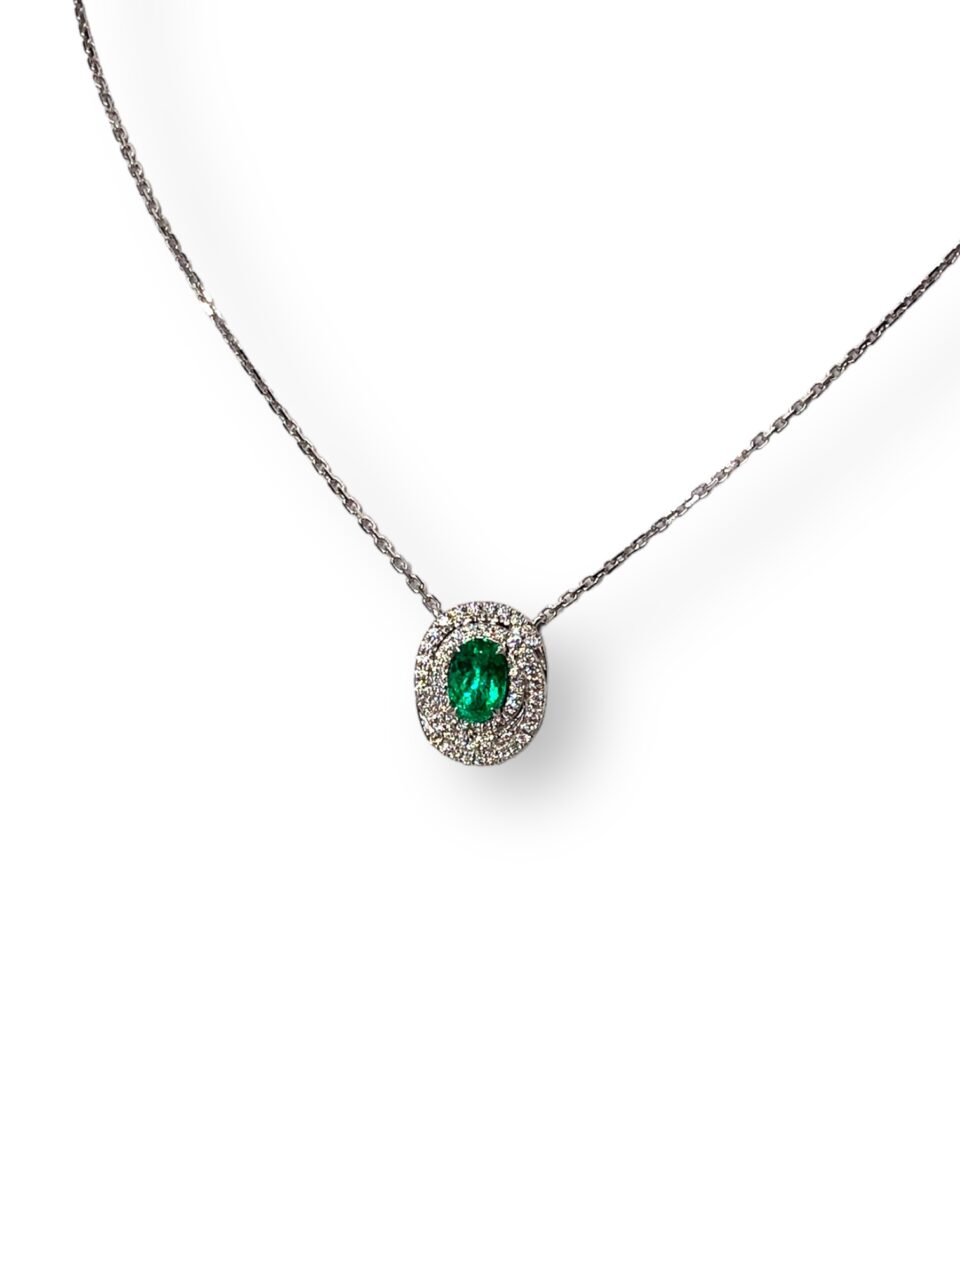 colombian emeralds, muzo emeralds, alpine green, emerald pendant, george smith